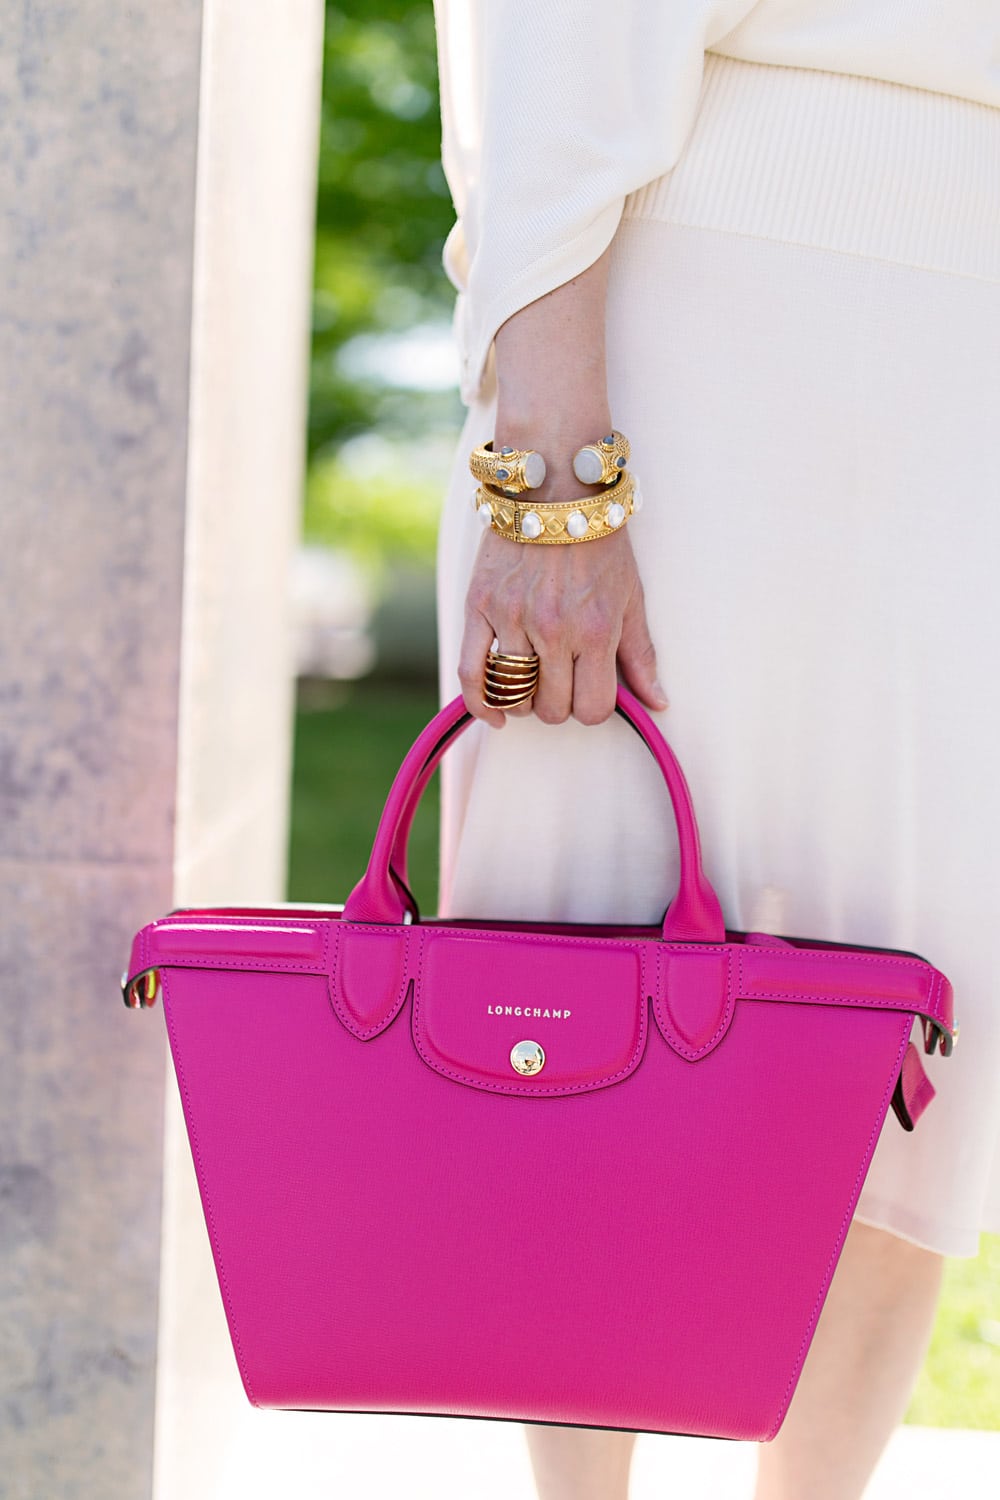 Longchamp Le Pliage Heritage cyclamen pink, julie vos bracelets, vita fede futuro ring